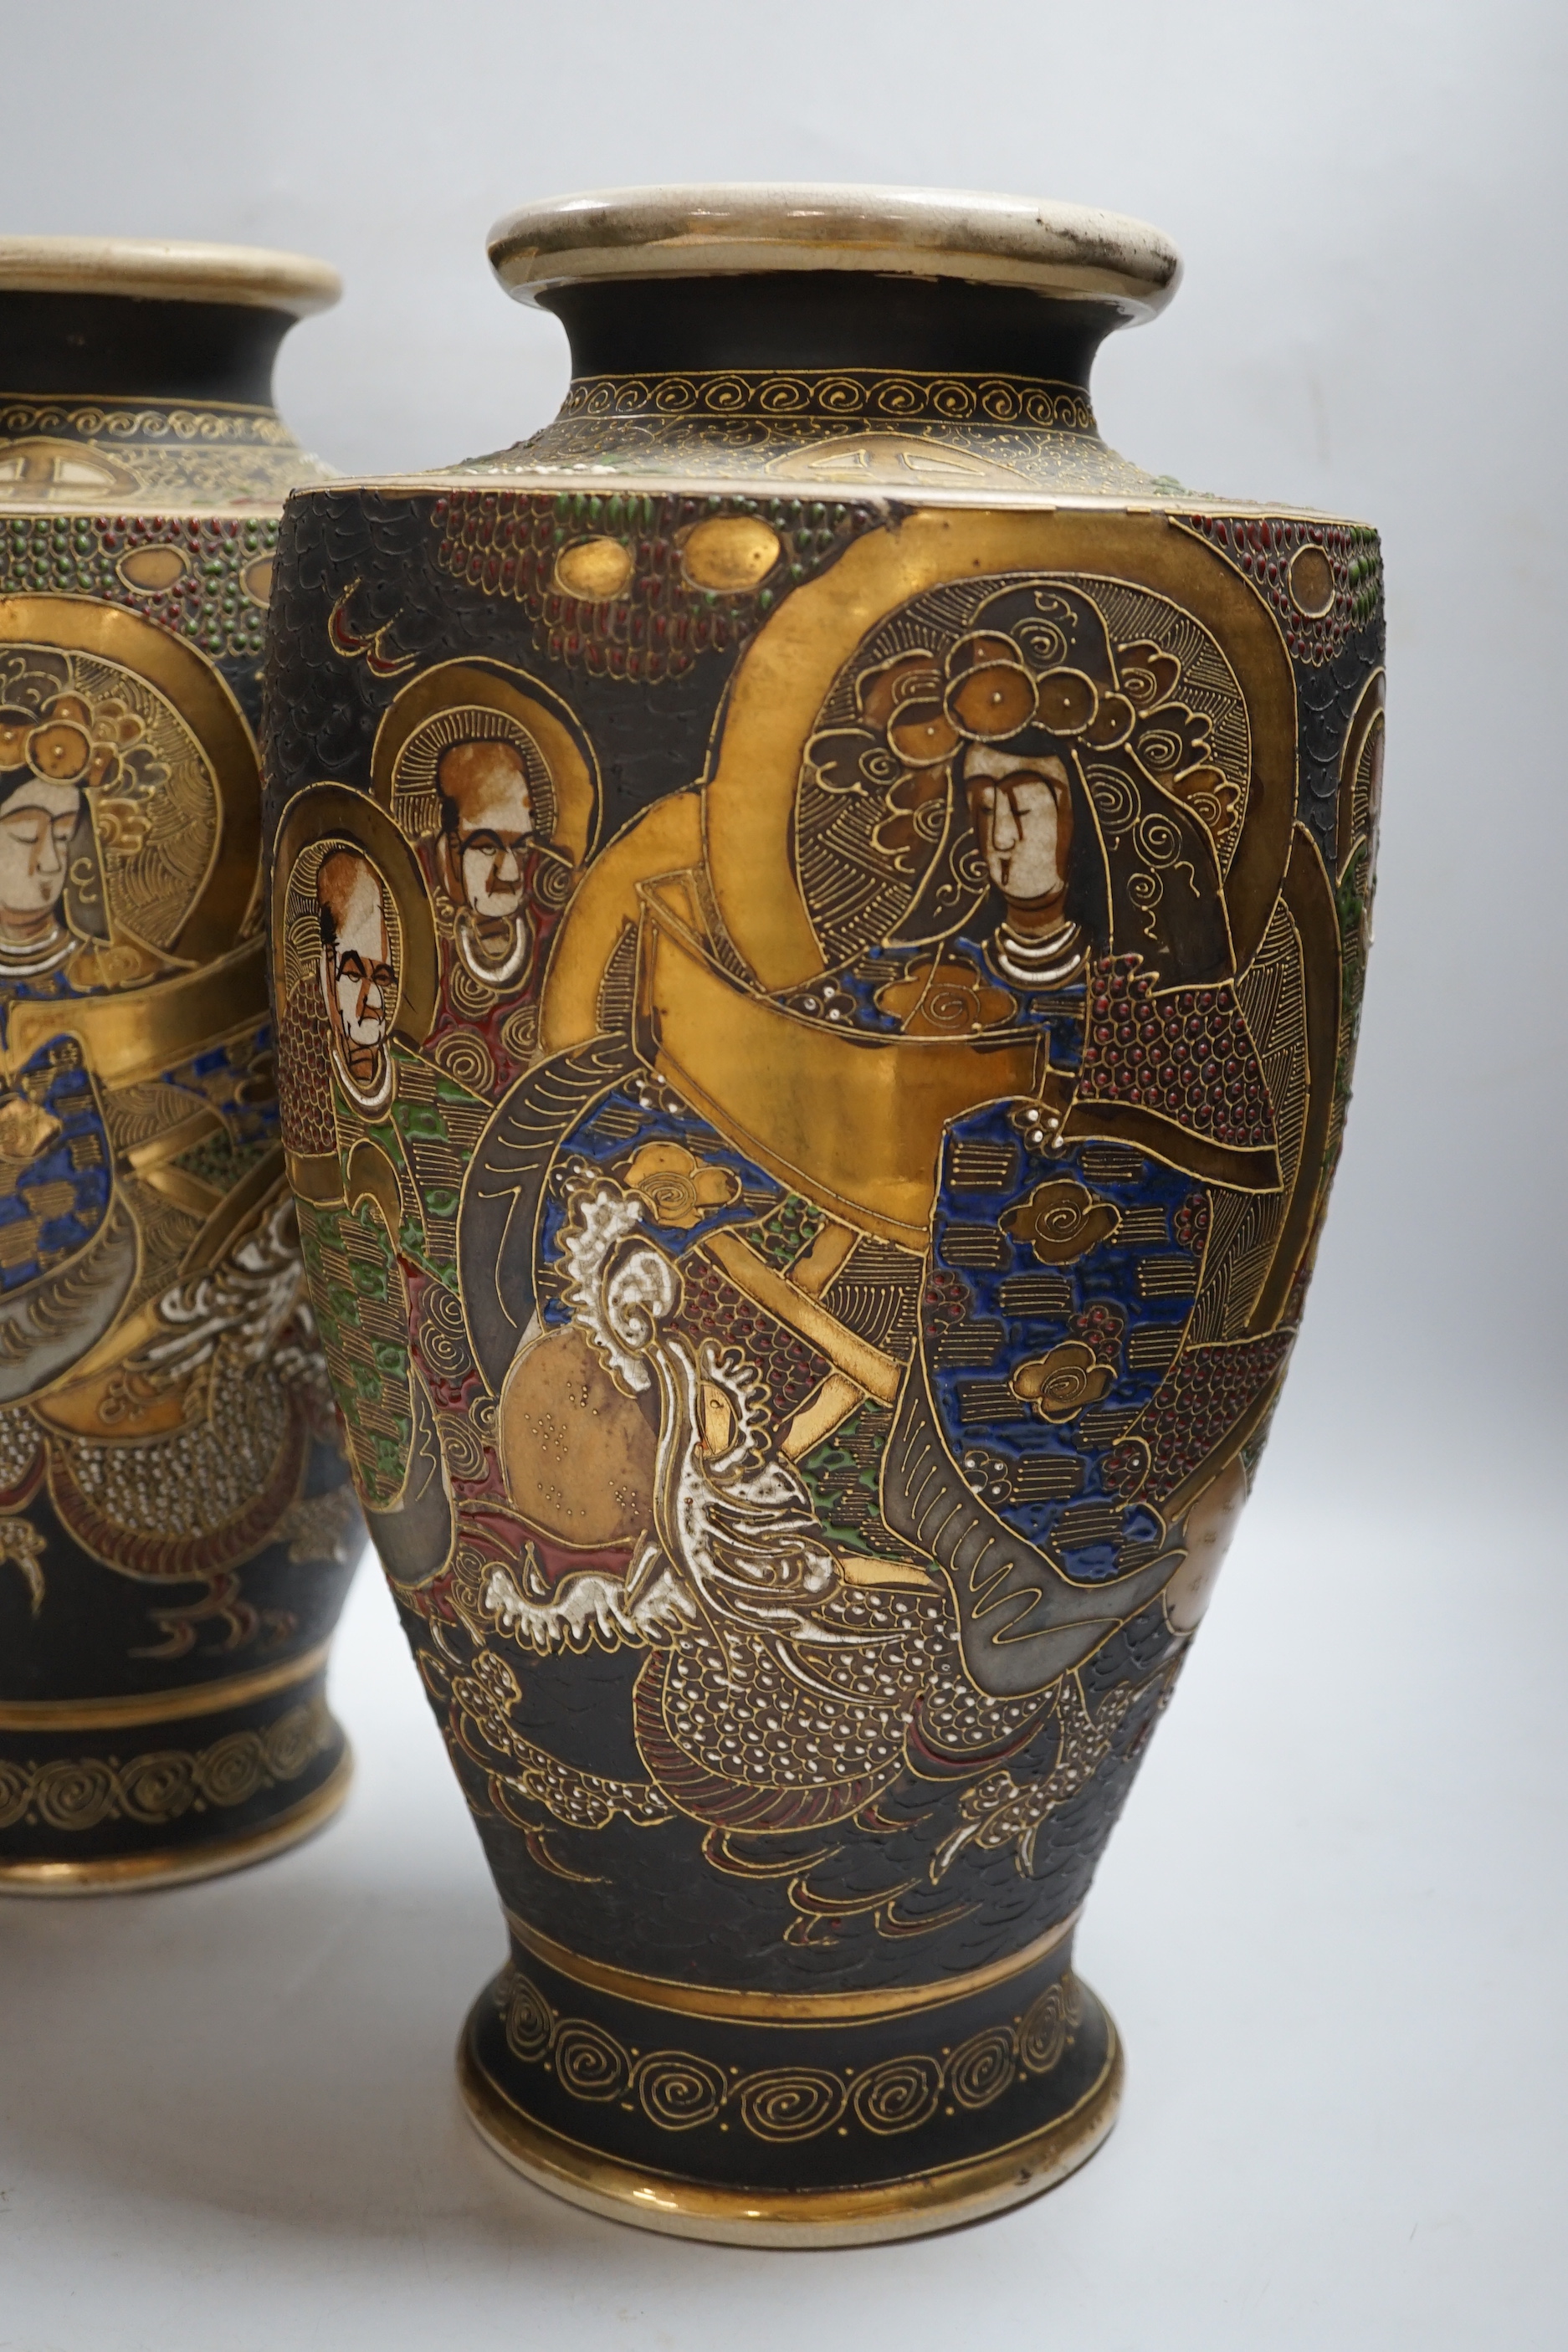 A pair of Satsuma ware vases, 38cm high